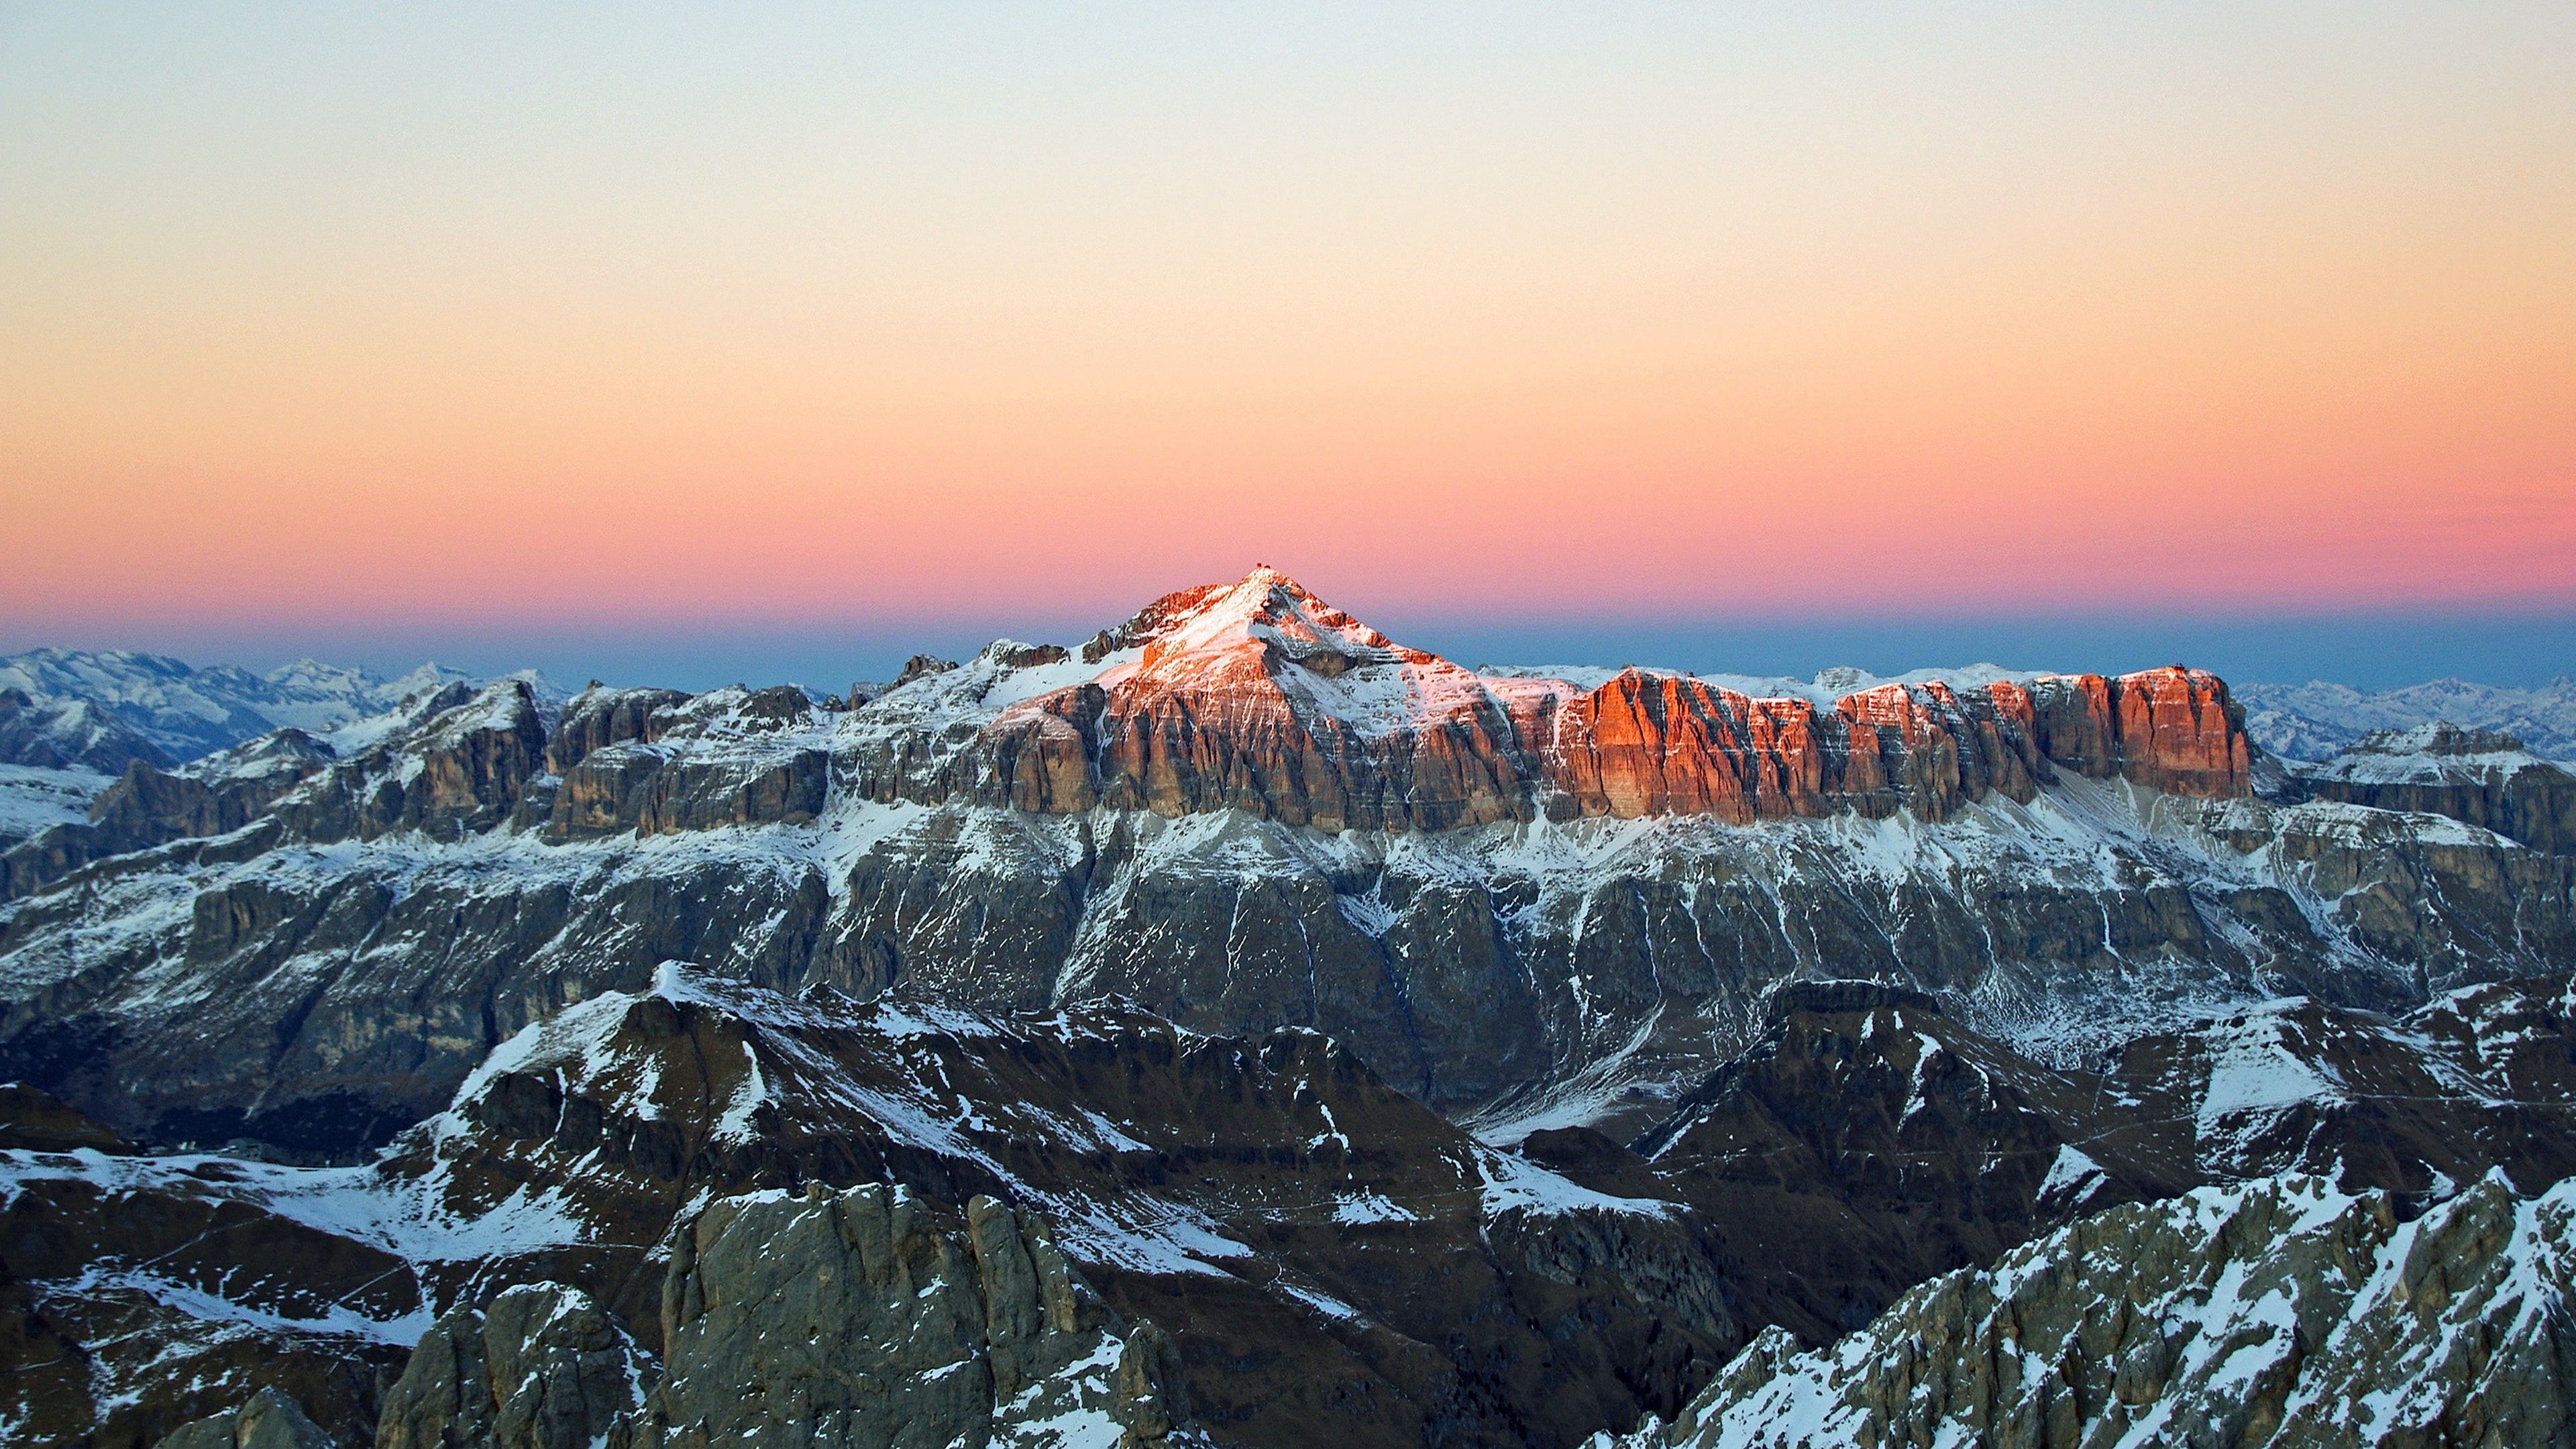 Glacier mountains, Snow covered, Mountain range, Alpenglow, Winter, Mountain Peak, Landscape, Scenic, 4k Free deskk wallpaper, Ultra HD